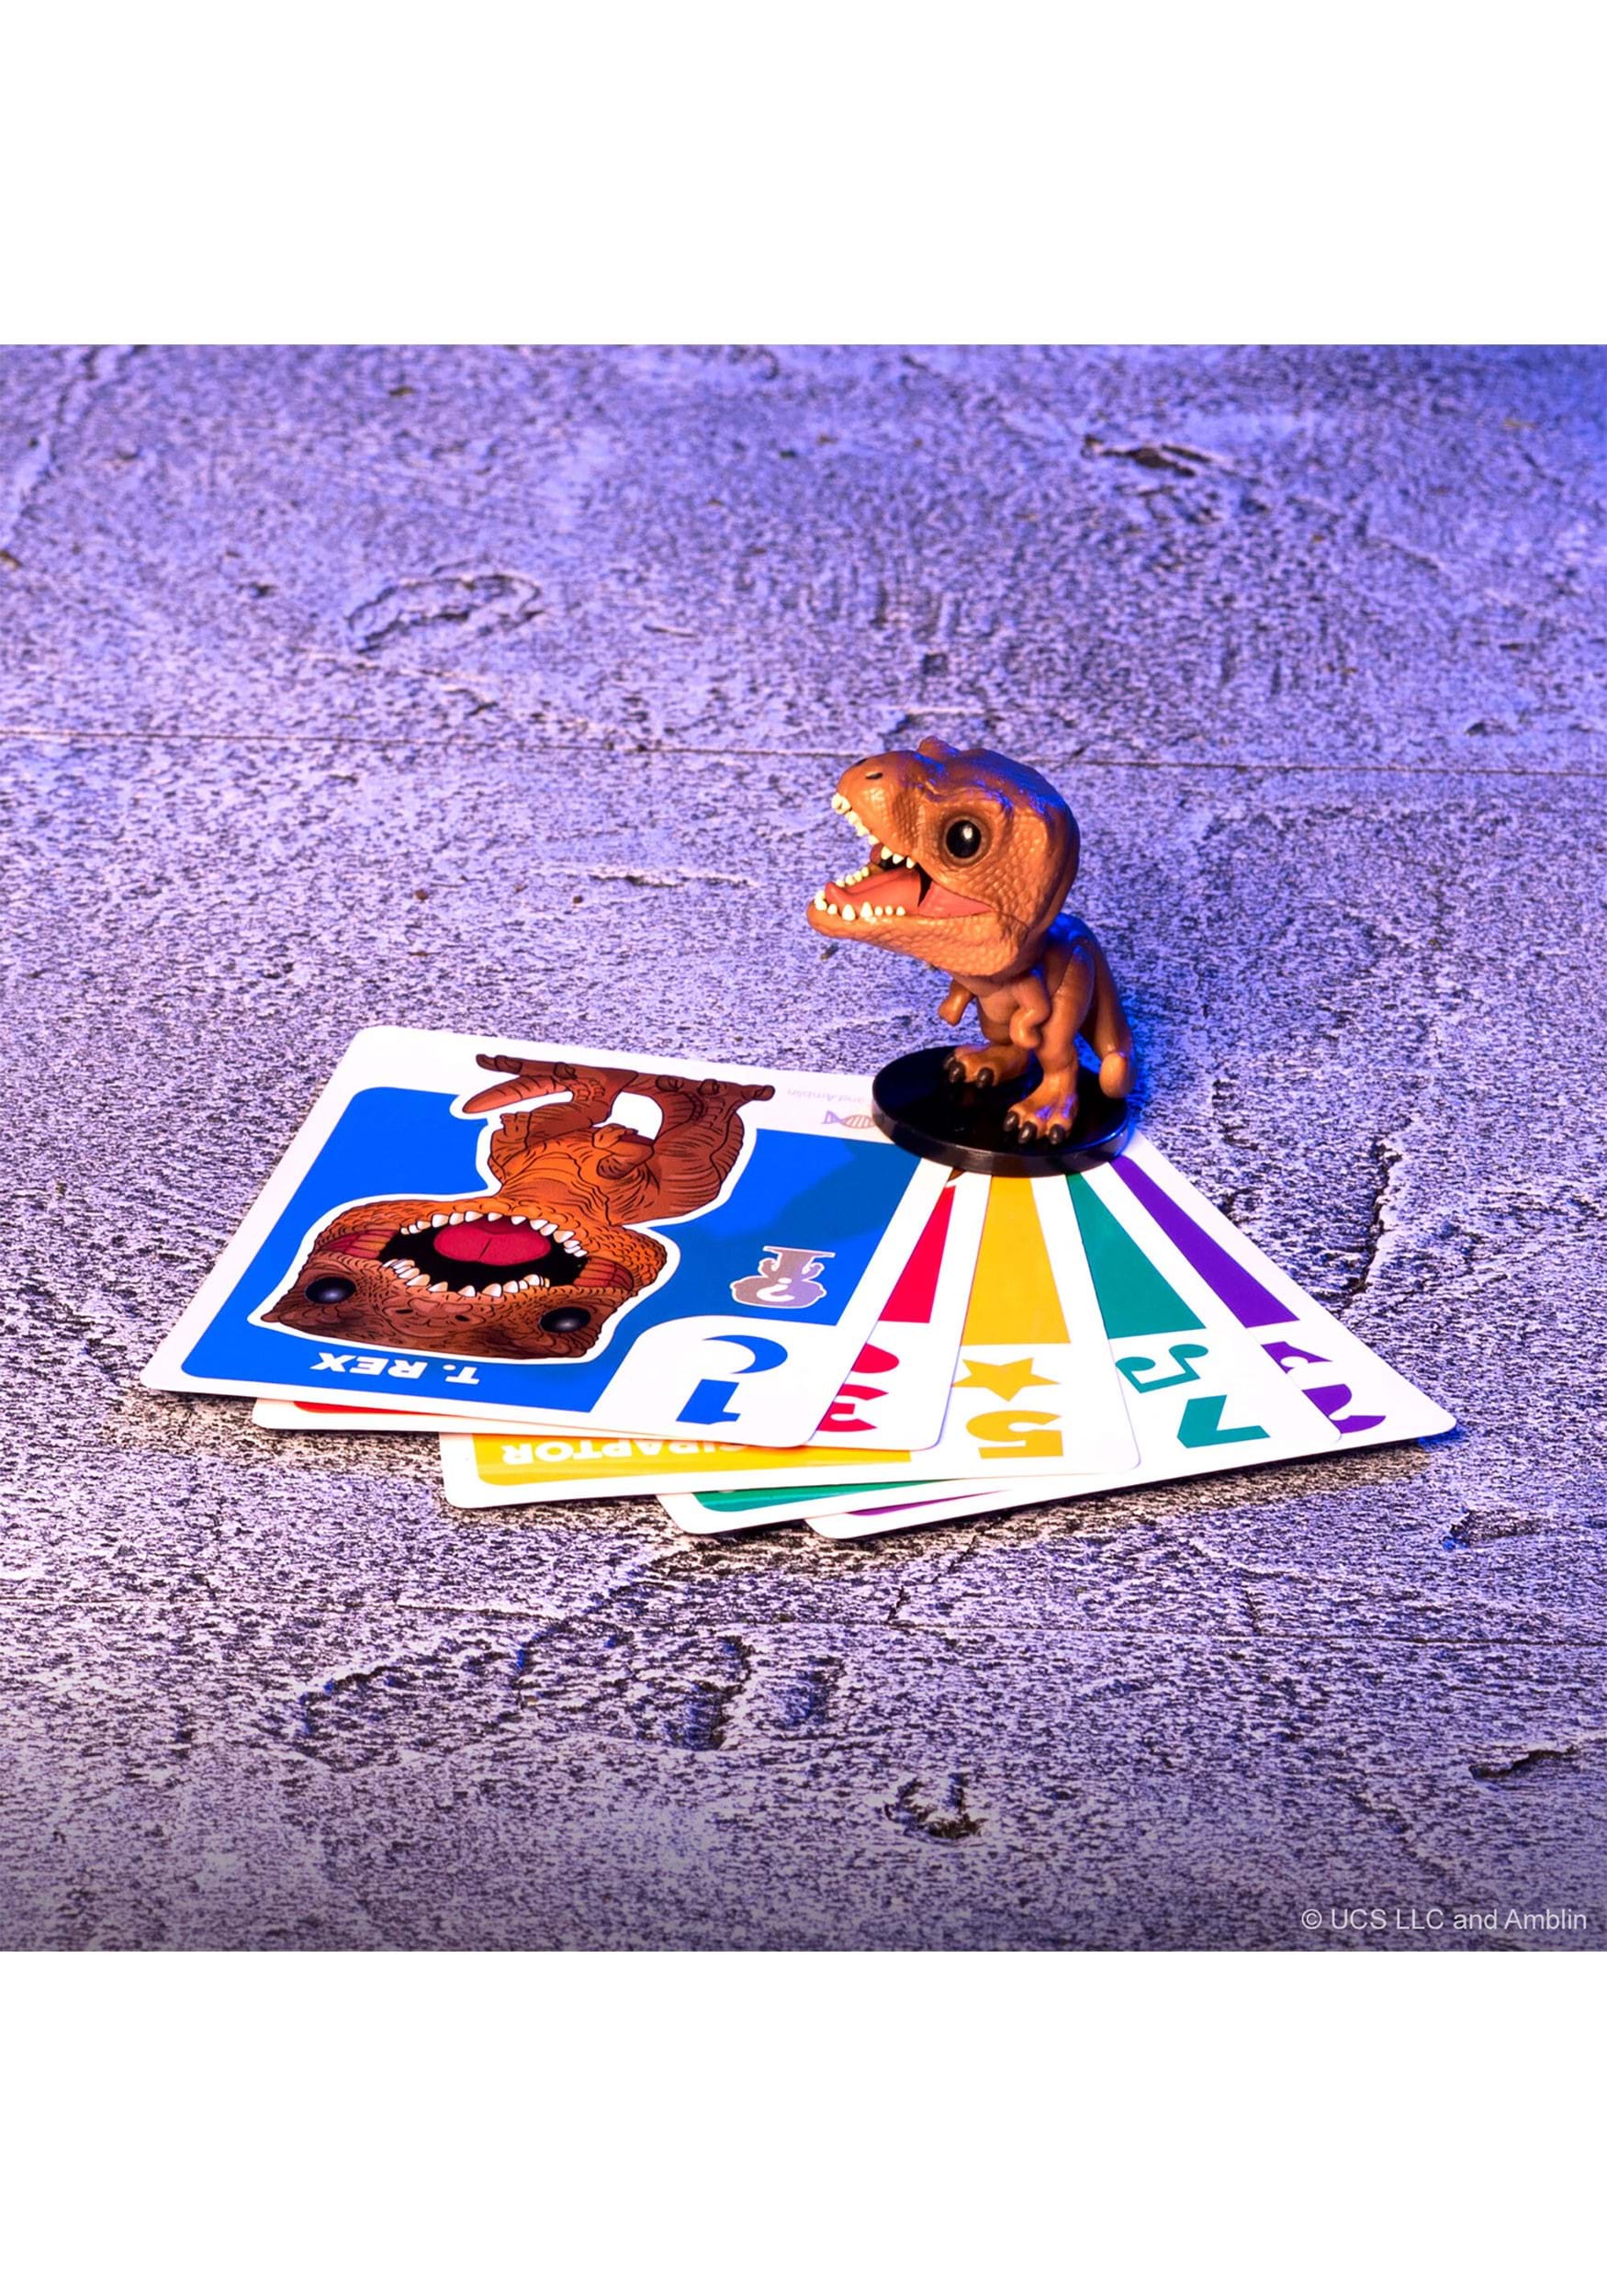 Jurassic Park T-Rex Something Wild POP! Card Game